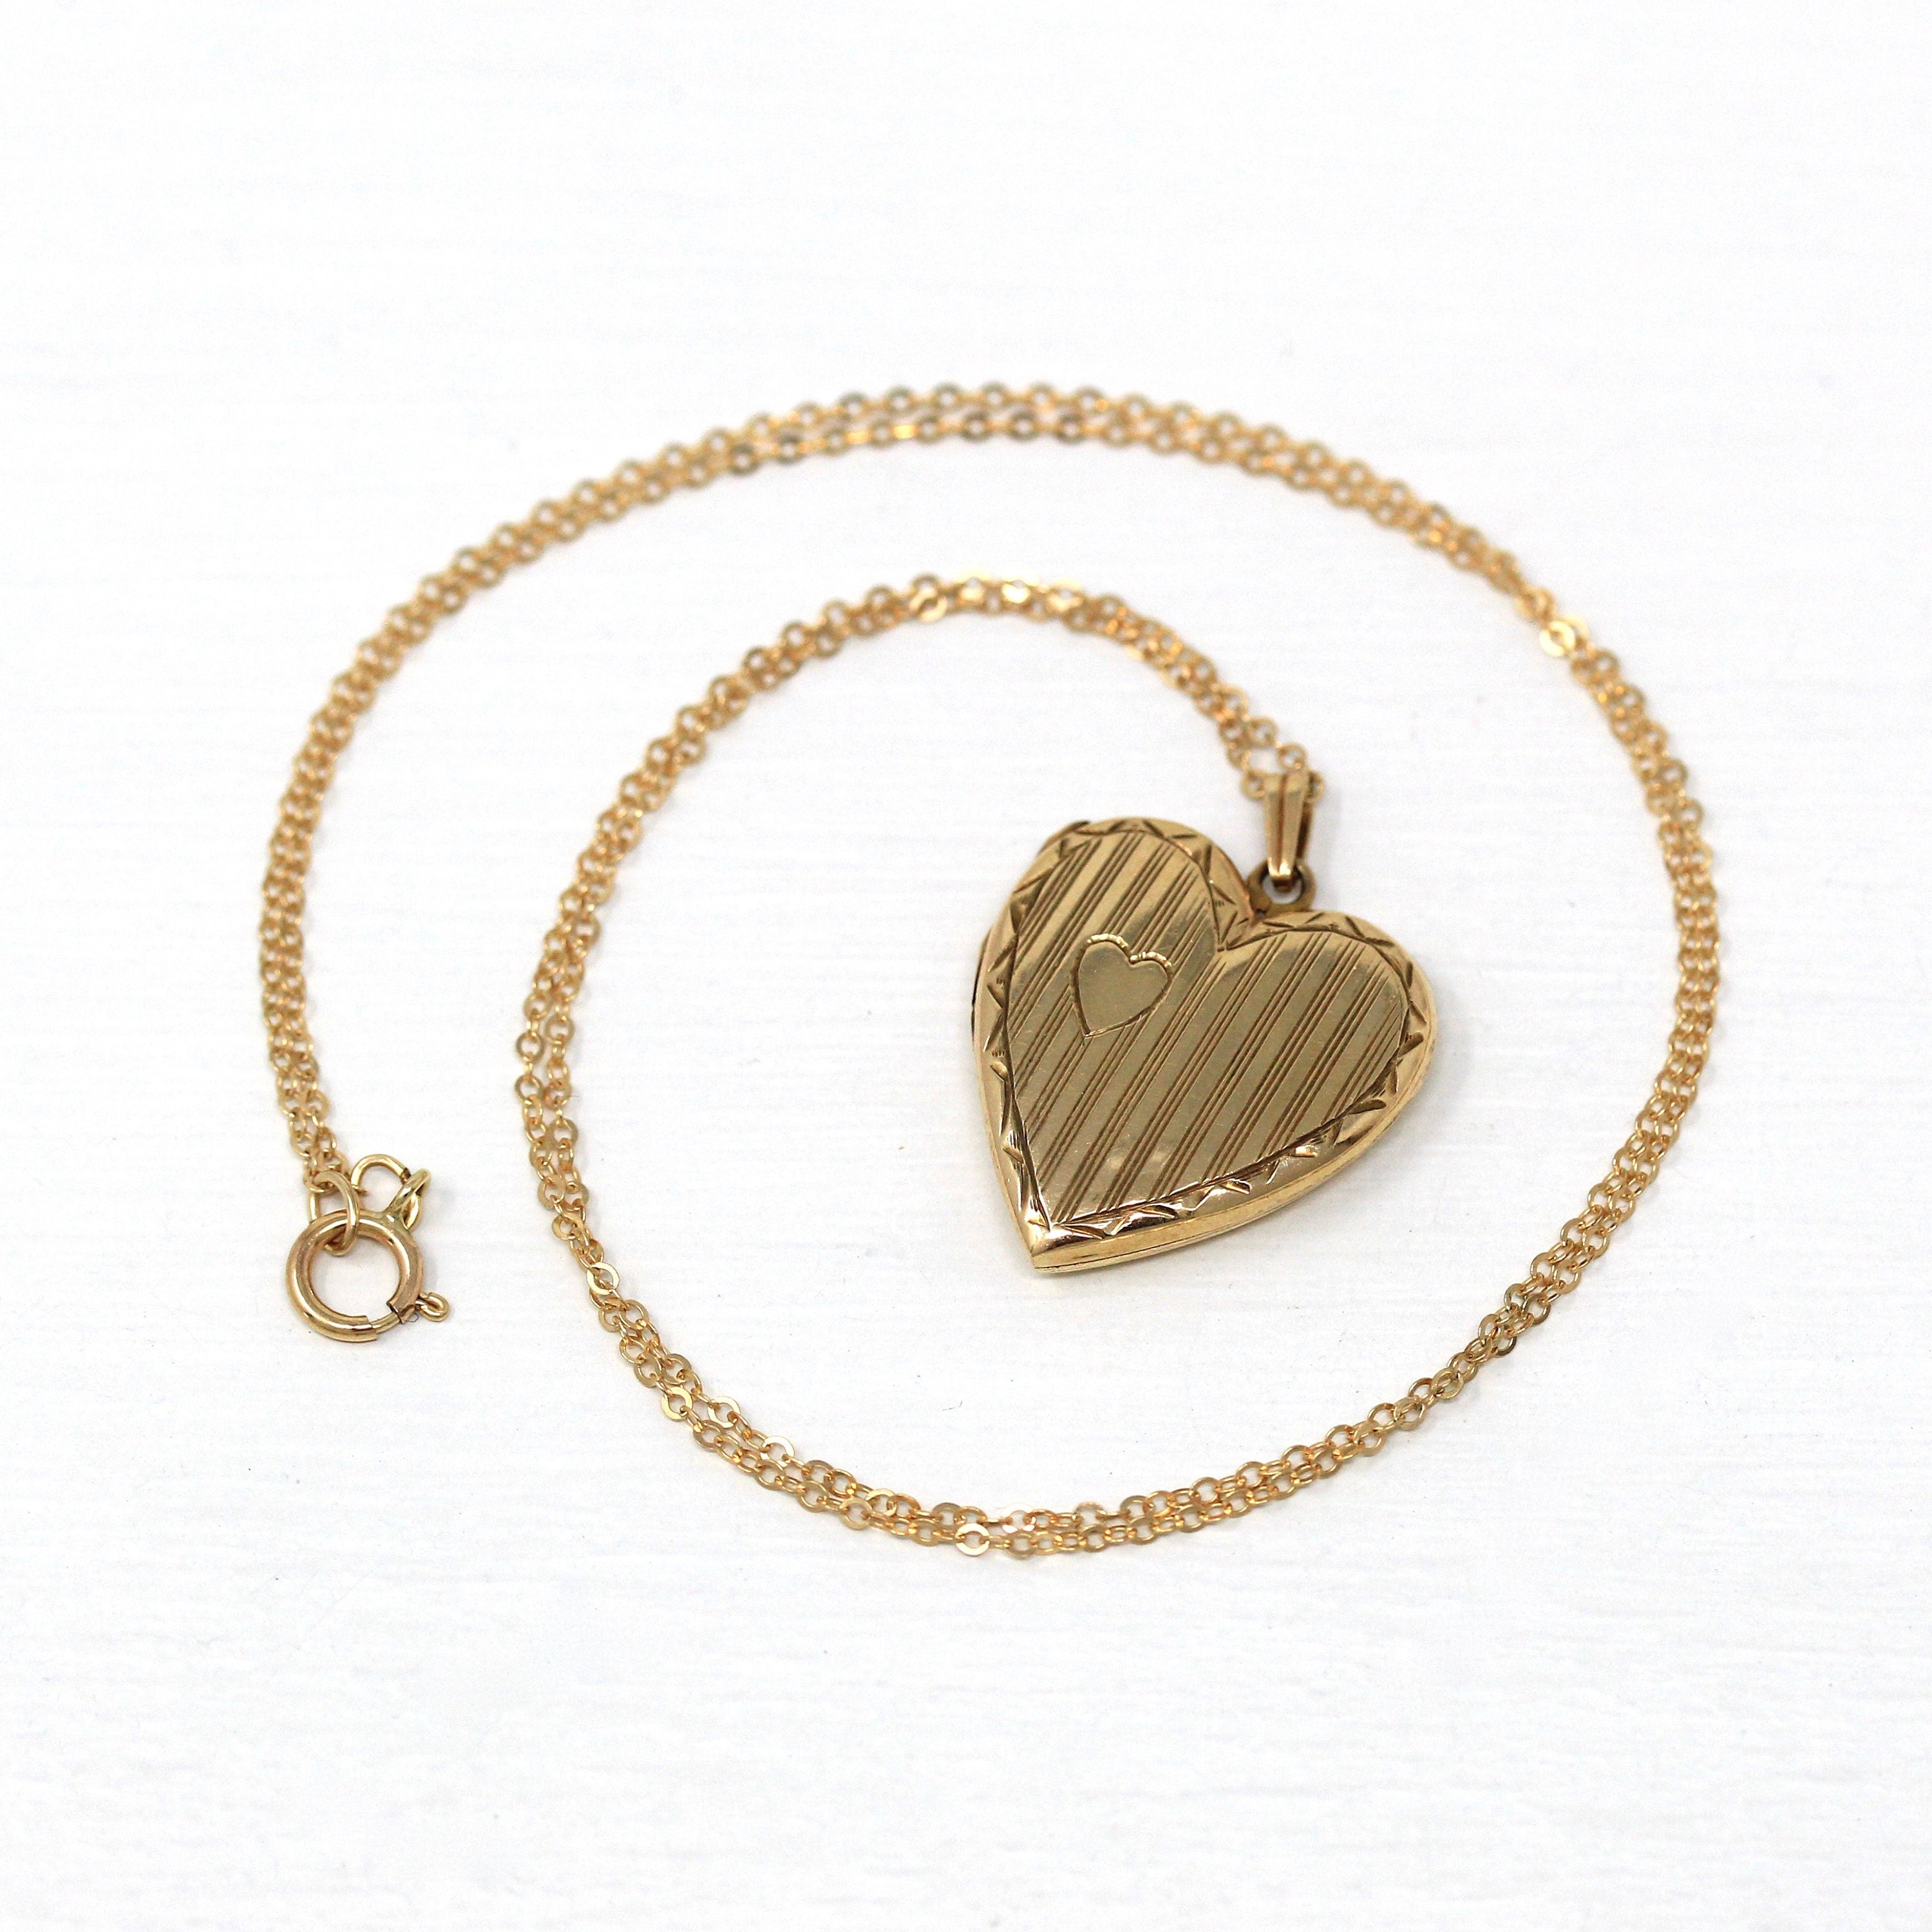 Sale - Letter D Locket - Retro 10K Yellow Gold Heart Shaped Pendant Necklace - Vintage Circa 1940s Era Fine Keepsake Photo ESEMCO Jewelry Add 10K 18